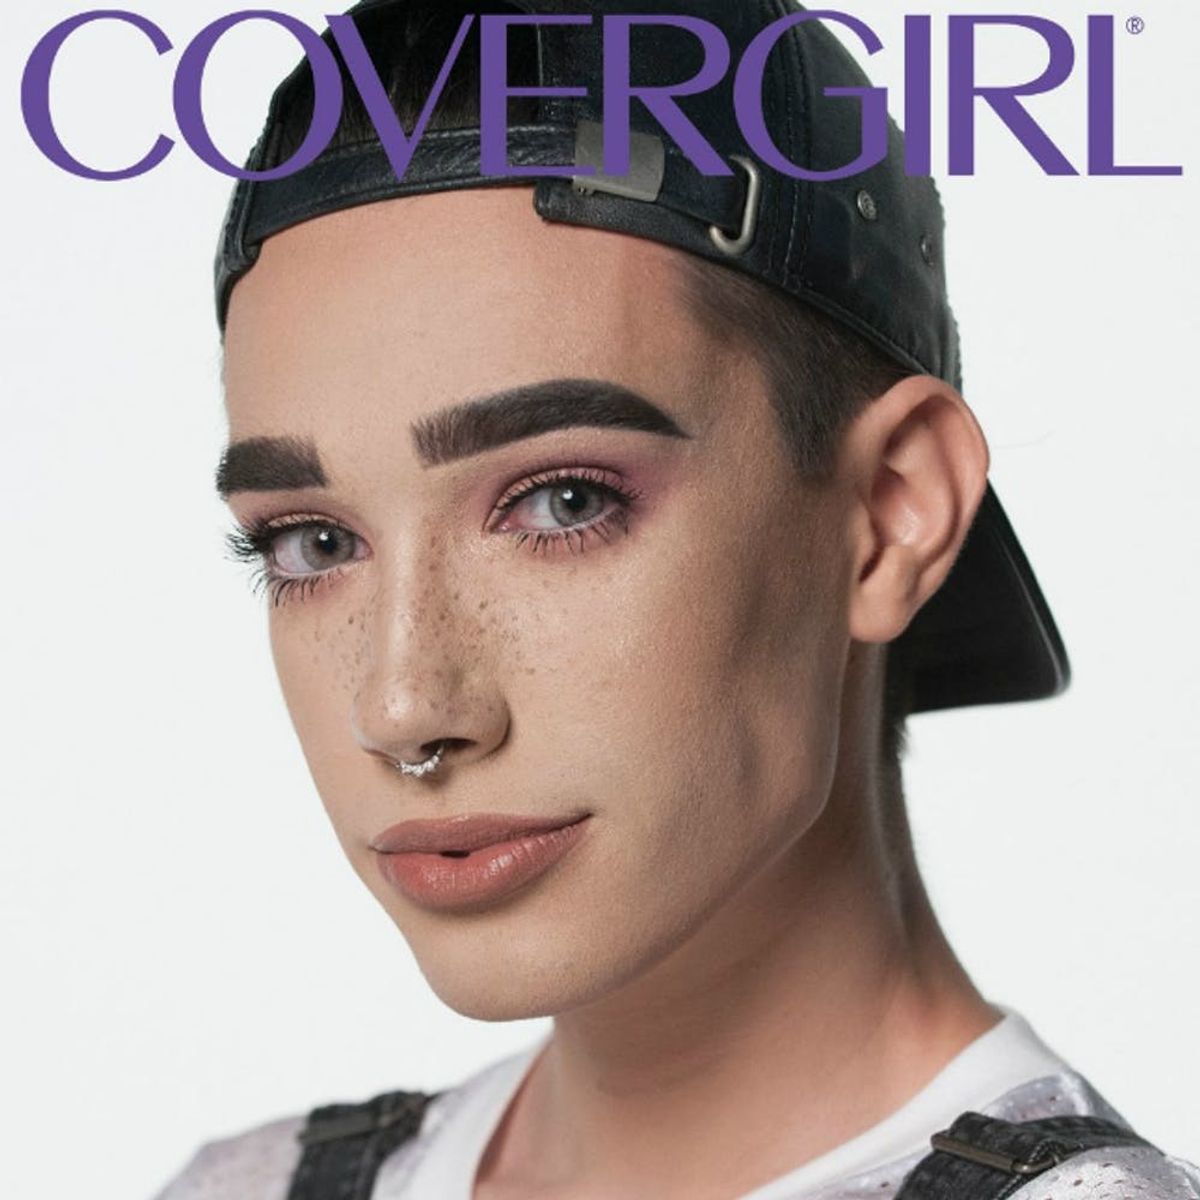 Meet CoverGirl’s First Male Spokesperson